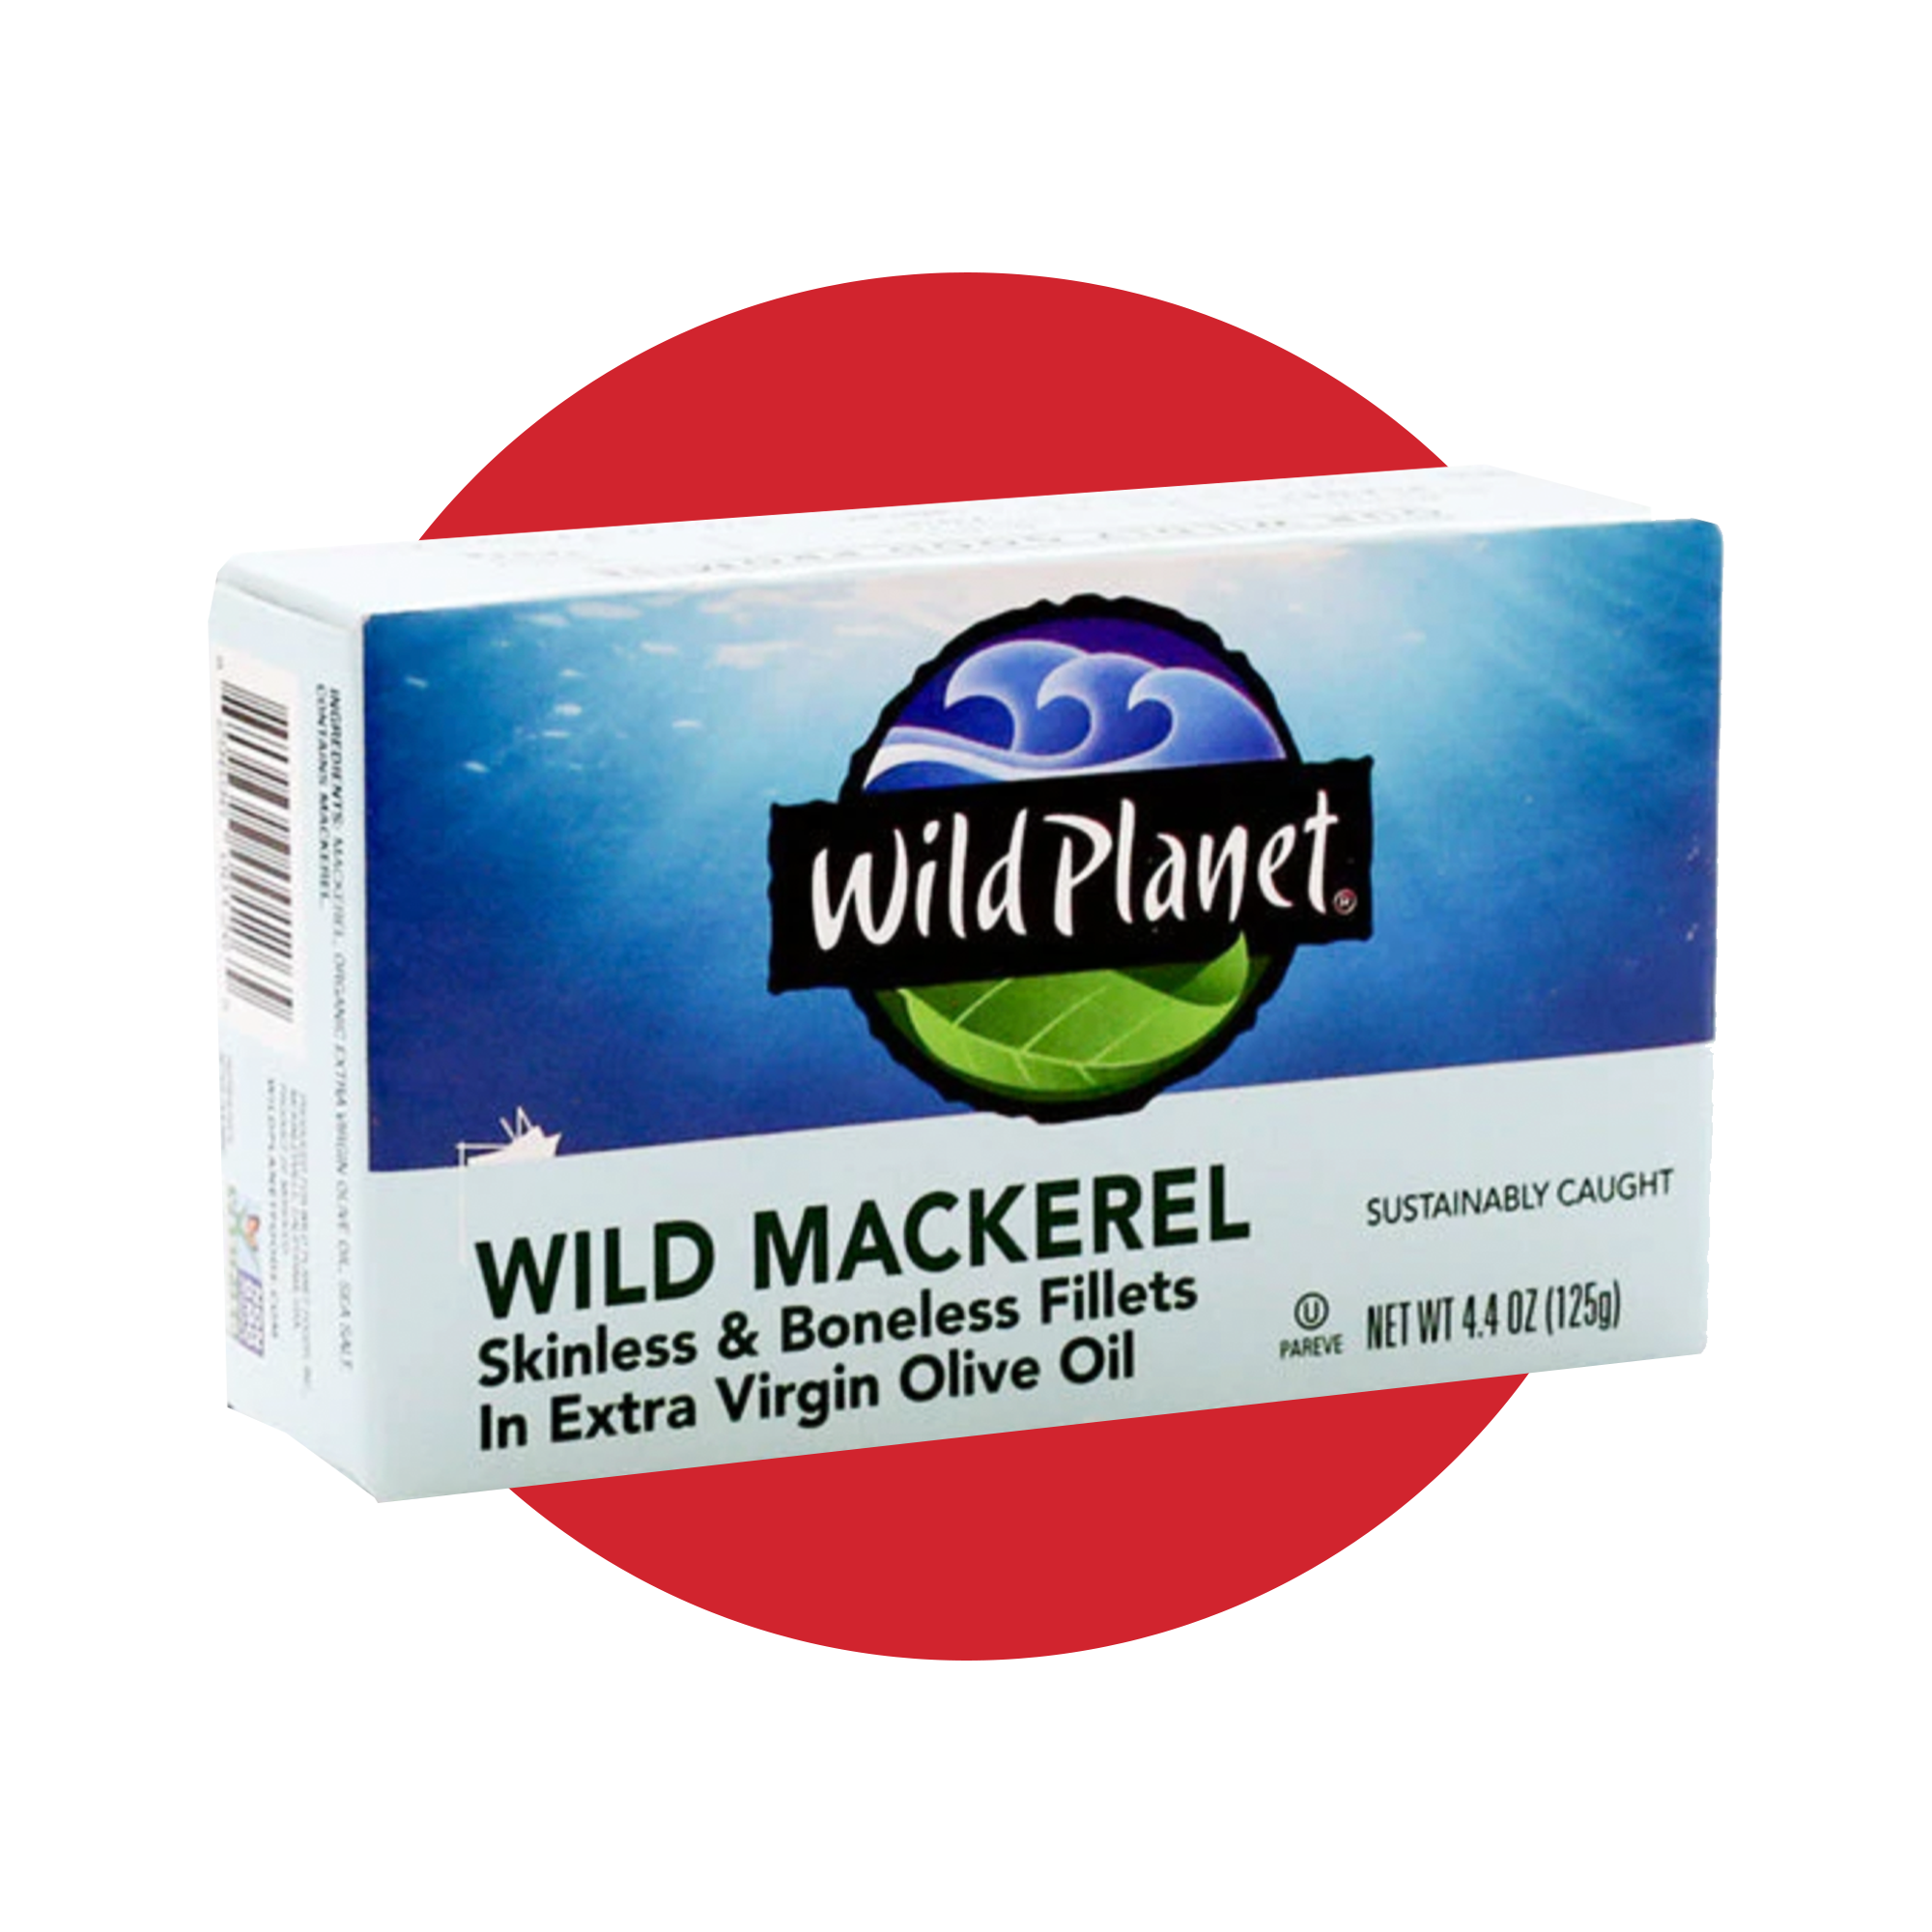 Wild Planet Wild Mackerel fillet